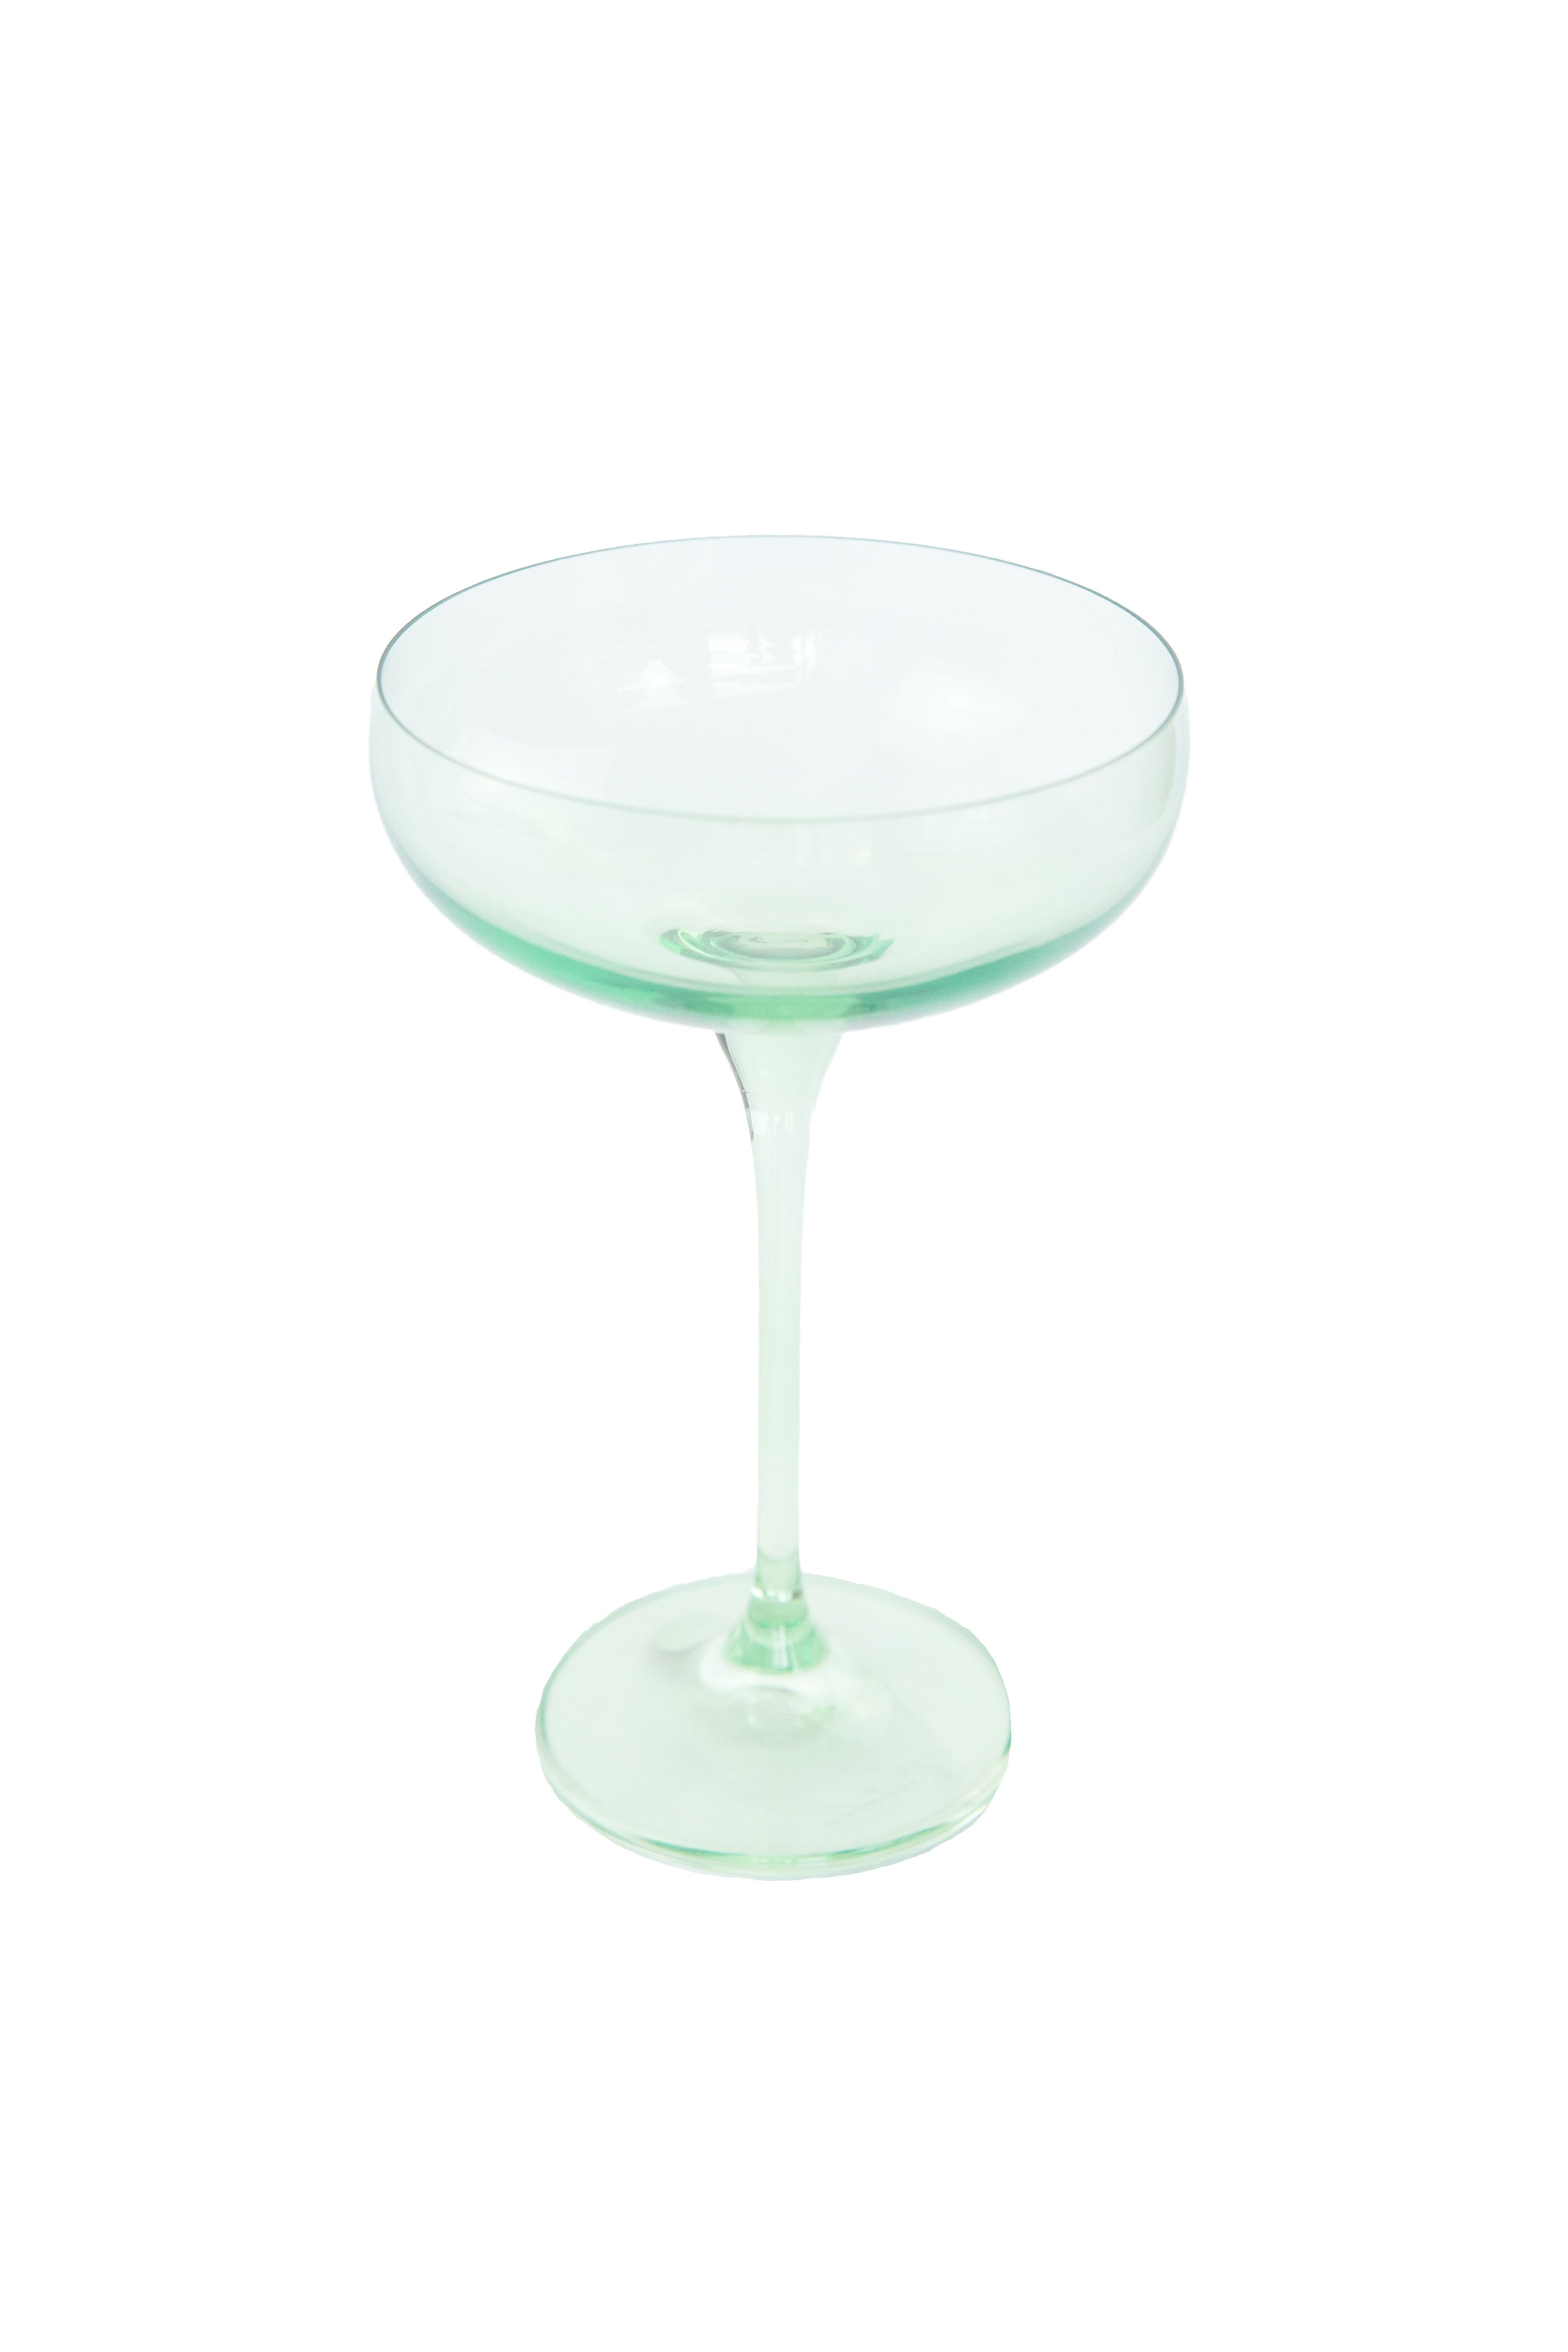 Estelle Colored Champagne Coupe Stemware - Set of 6 {Mint Green}